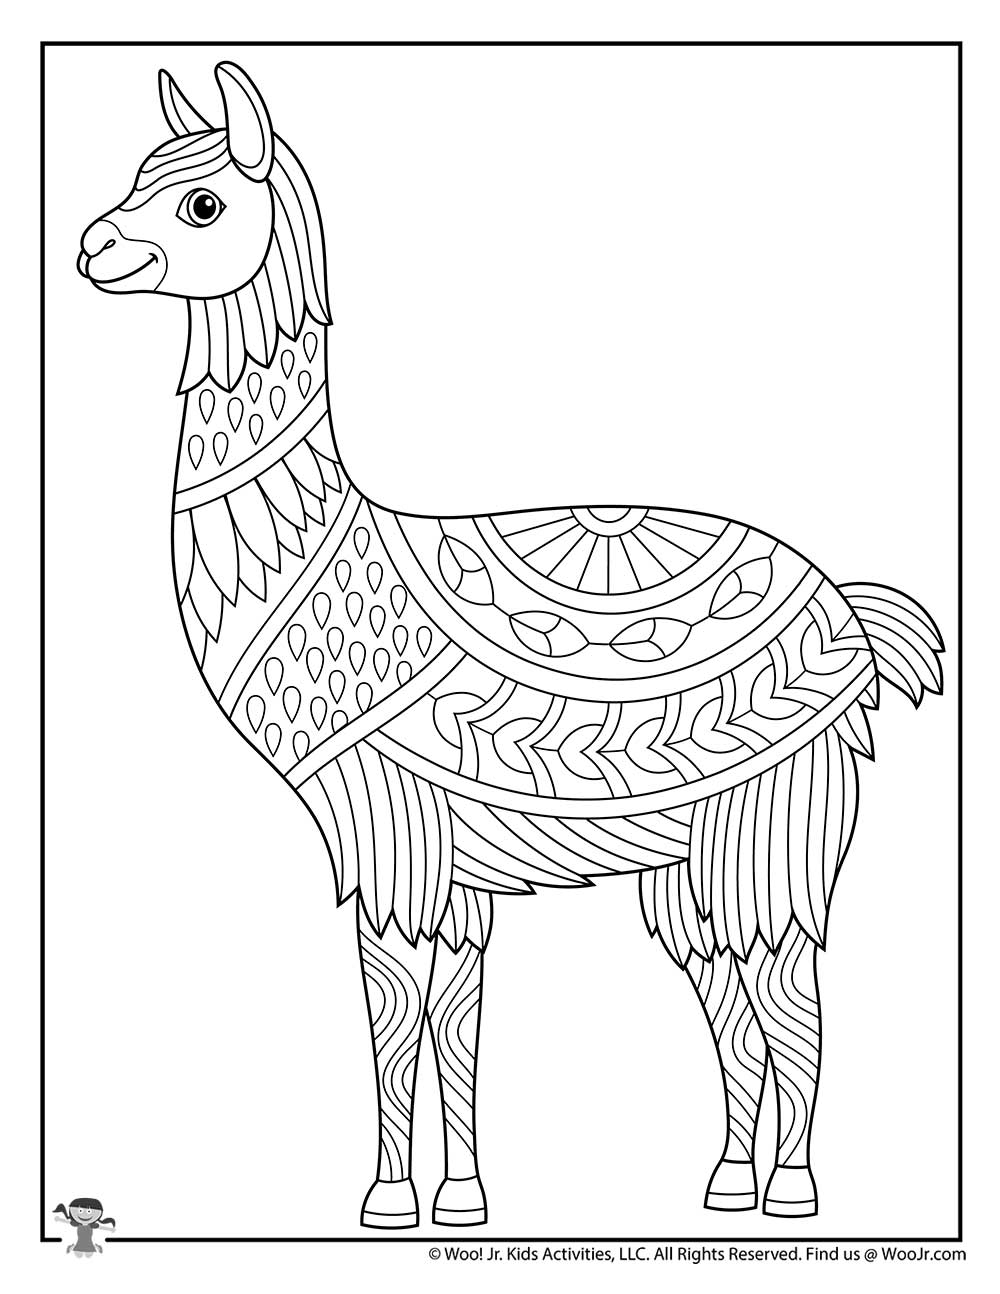 Llama Easy Adult Coloring Animals | Woo! Jr. Kids Activities : Children's  Publishing